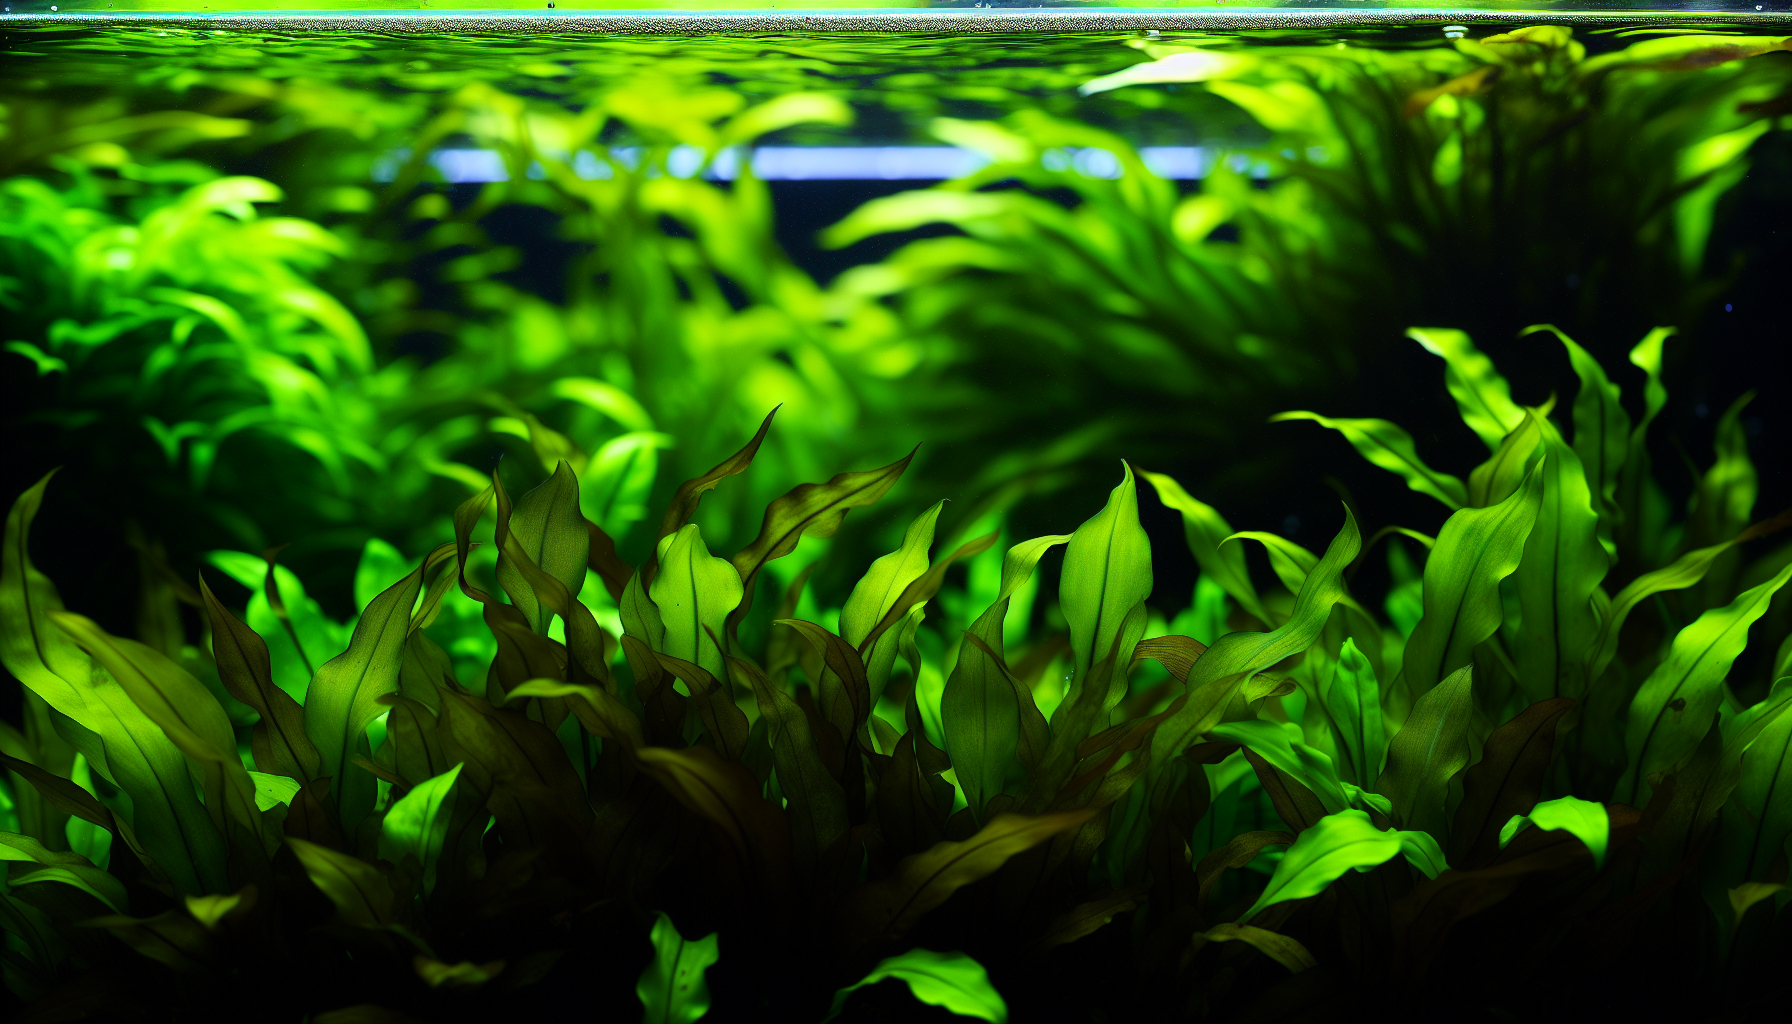 Lush foreground created by Cryptocoryne parva in an aquarium